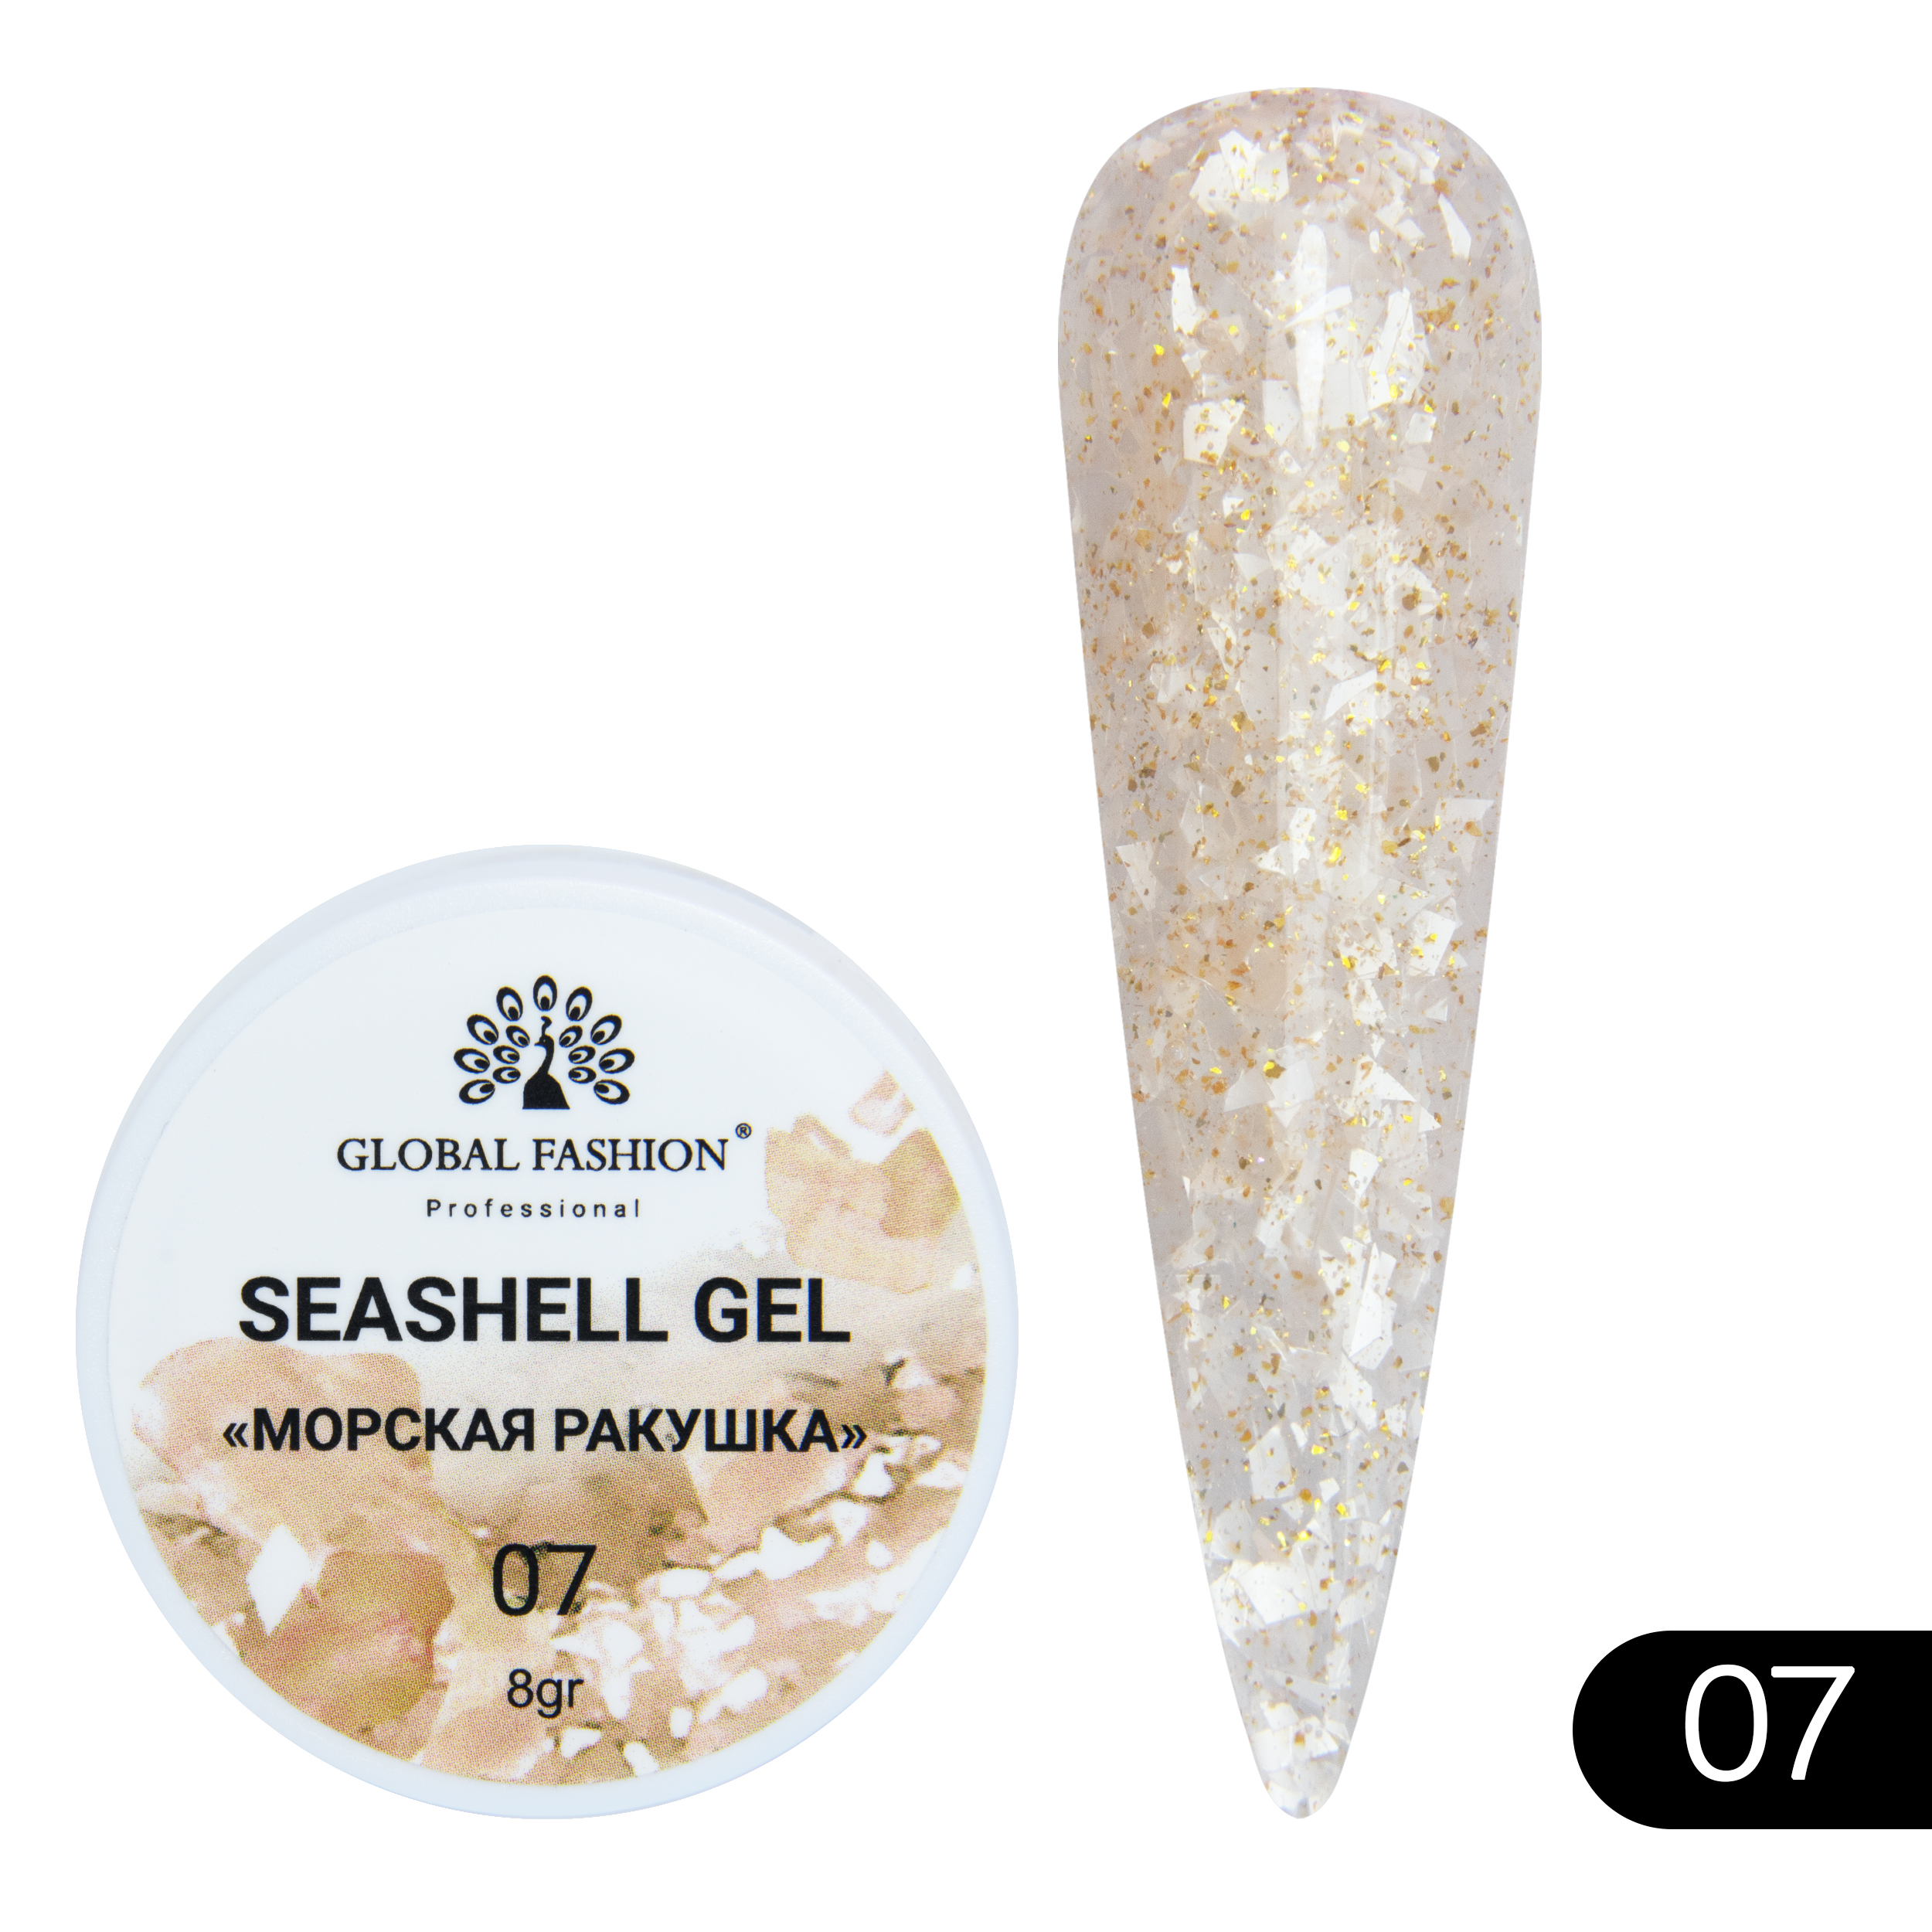 Гель-краска для ногтей Global Fashion с мраморным эффектом ракушки Seashell Gel №07 5 г сачок для аквариумных рыб ferplast 50